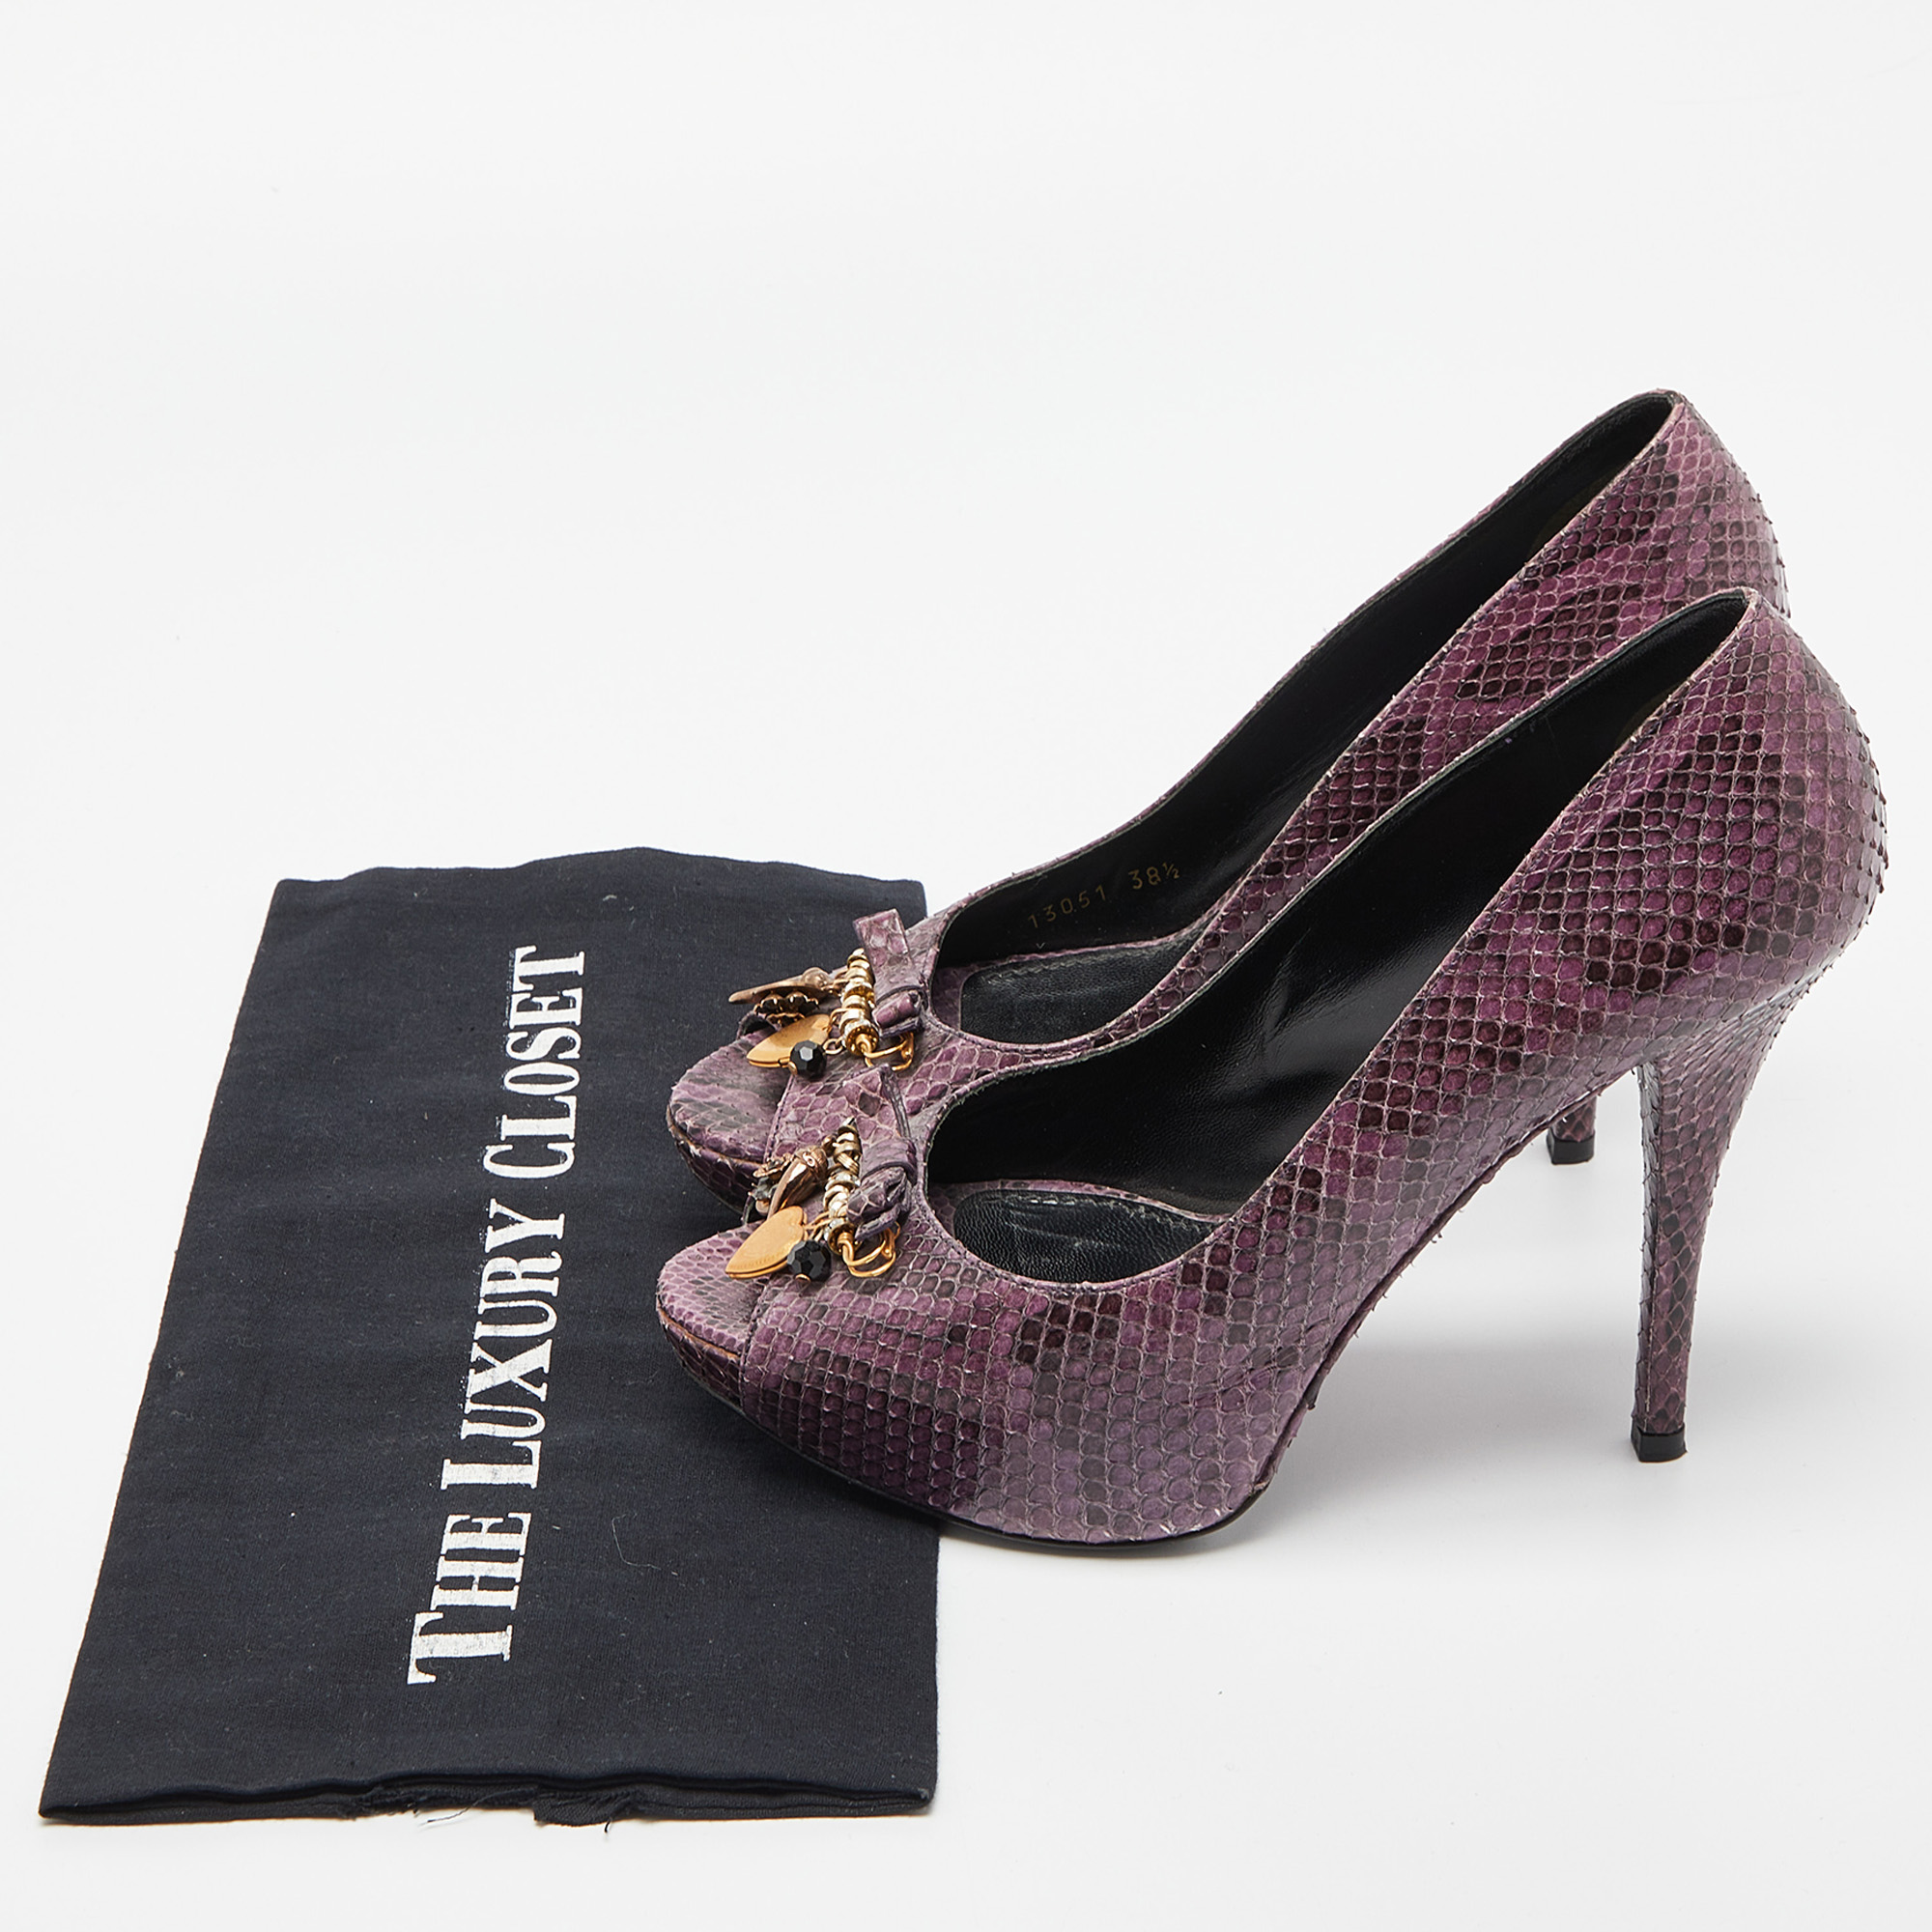 Dolce & Gabbana Purple Watersnake Leather Peep Toe Pumps Size 38.5